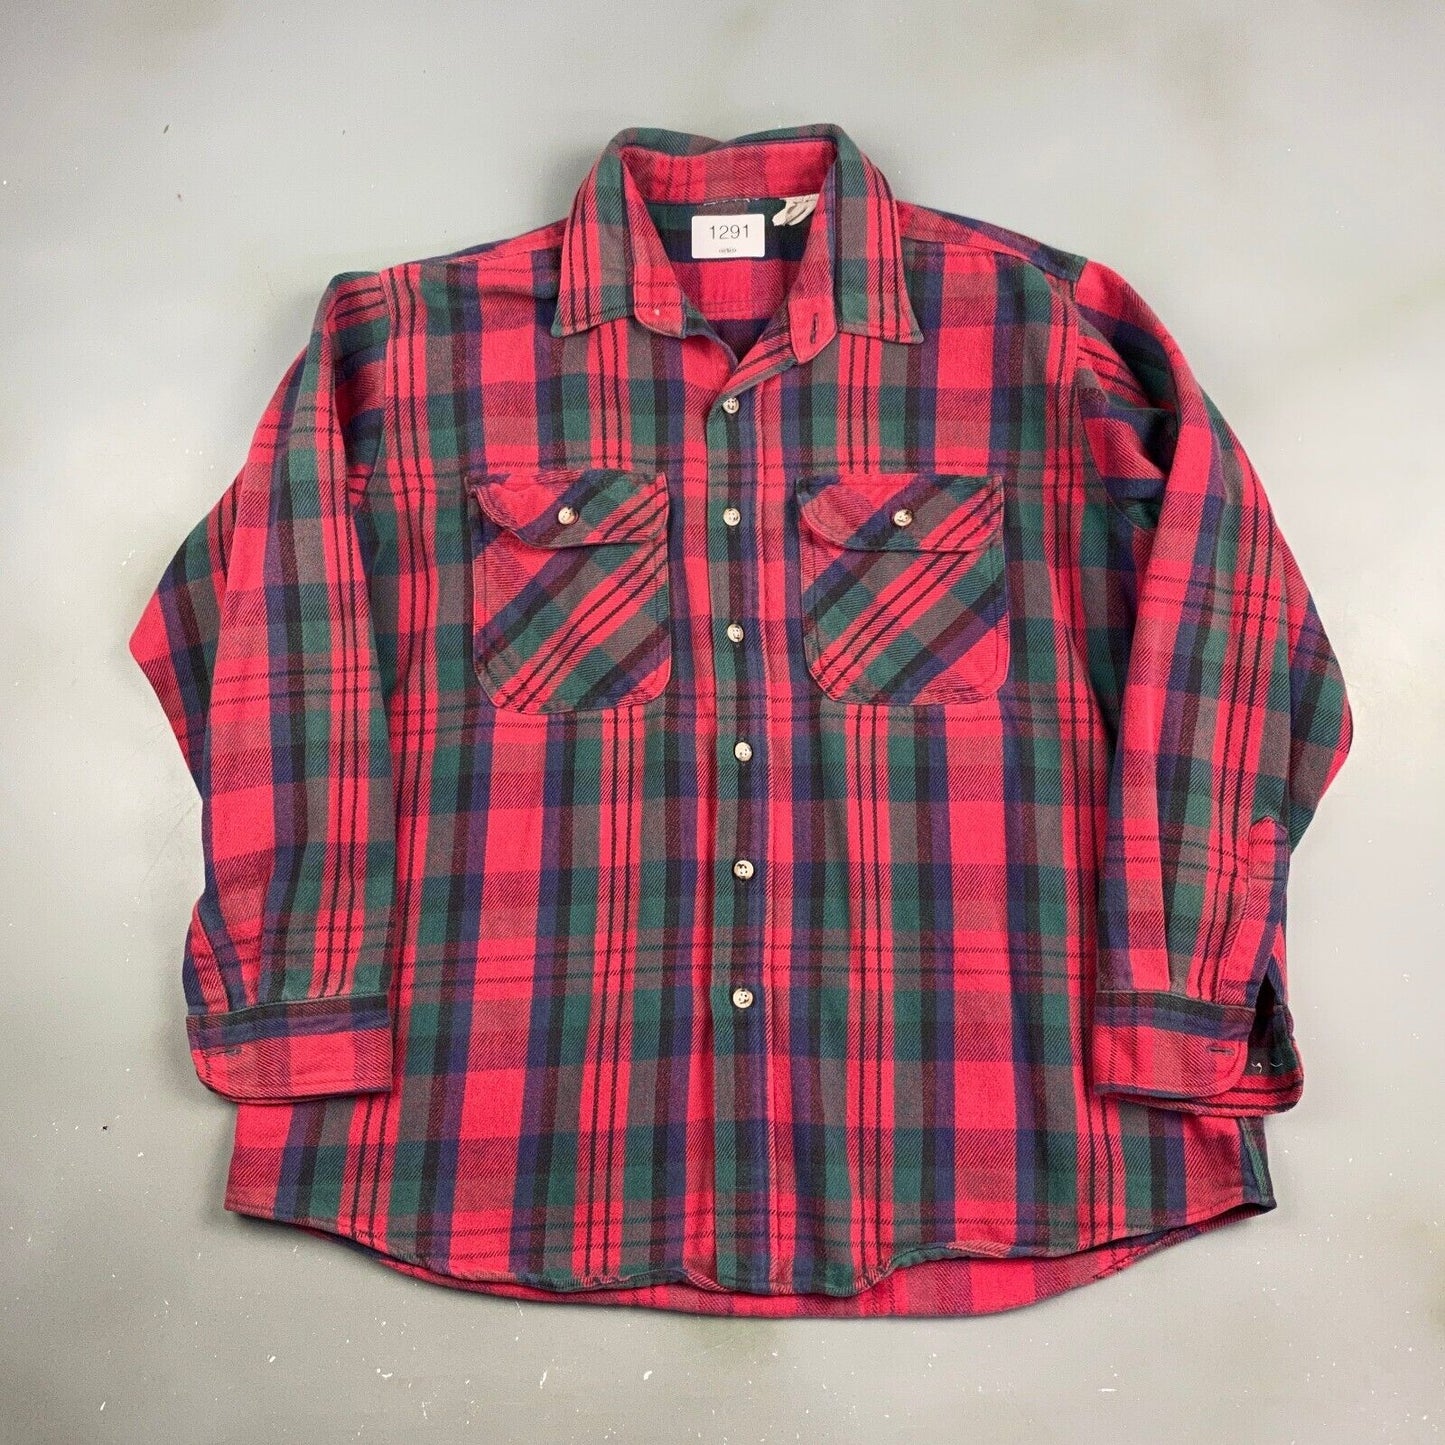 VINTAGE 90s Faded Plaid Flannel Button Up Shirt sz XL Adult